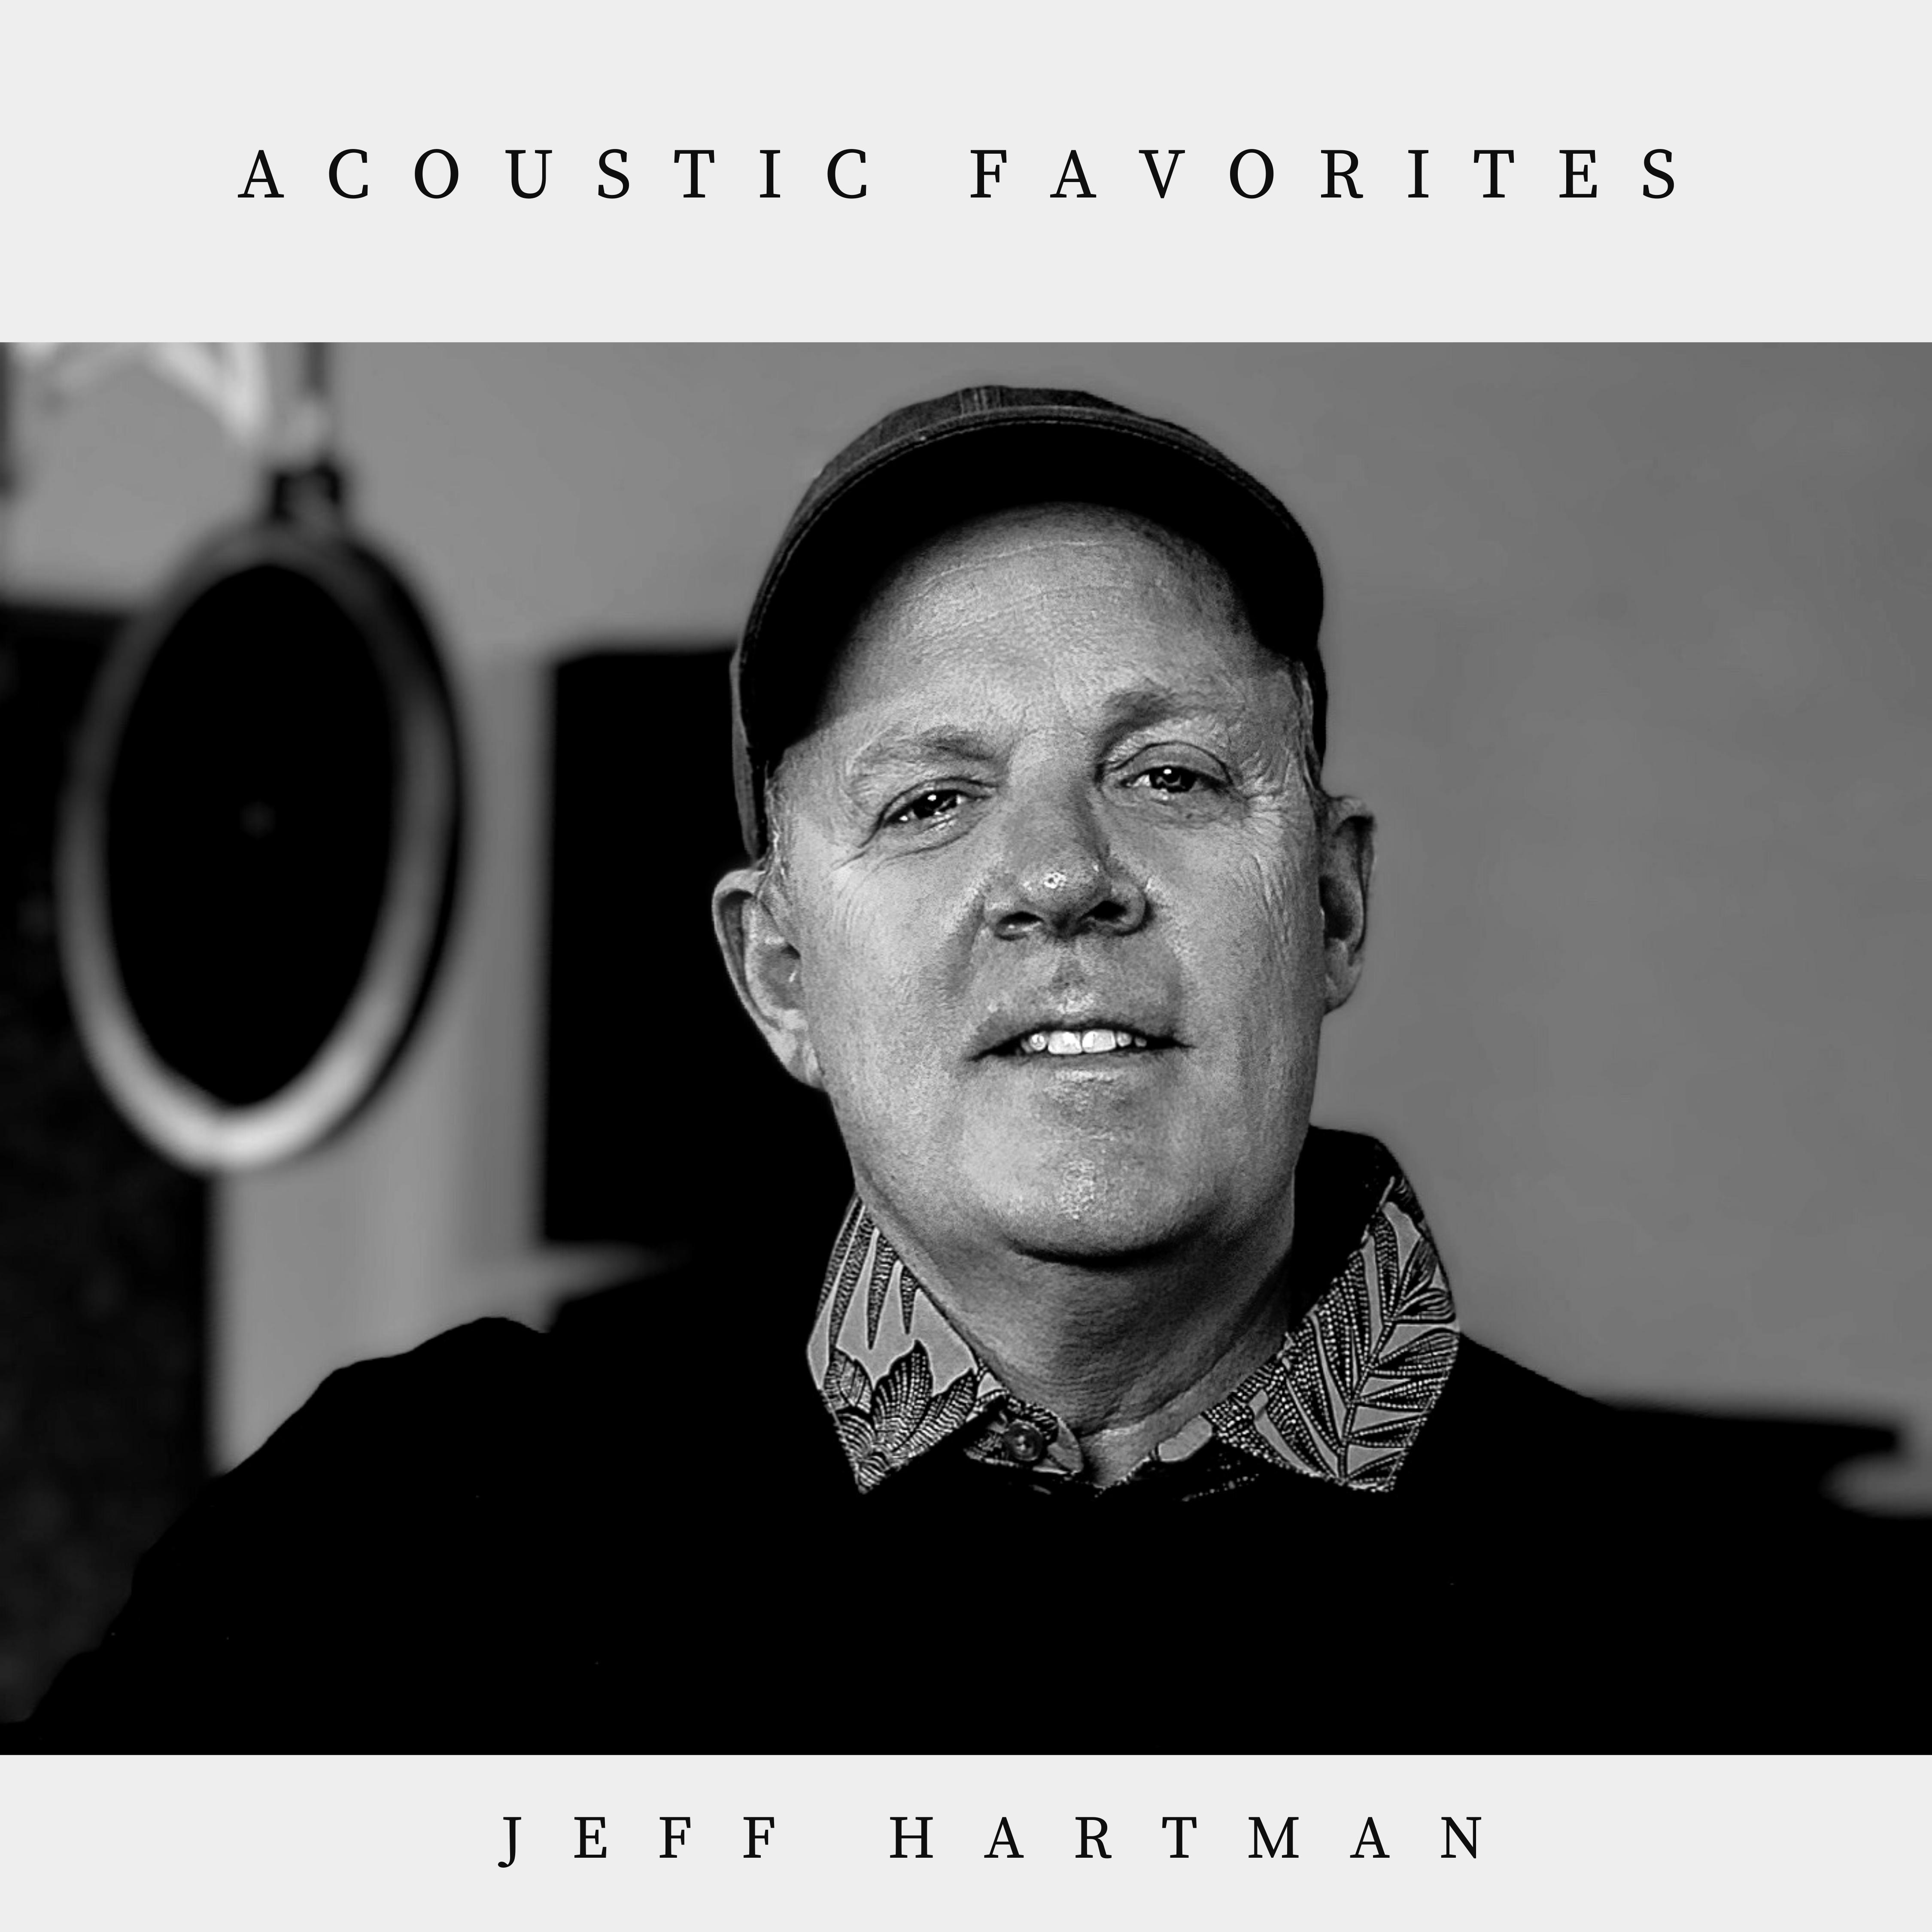 Prolific NJ Songwriter Jeff Hartman’s New Album Spotlights Only Acoustic Hits